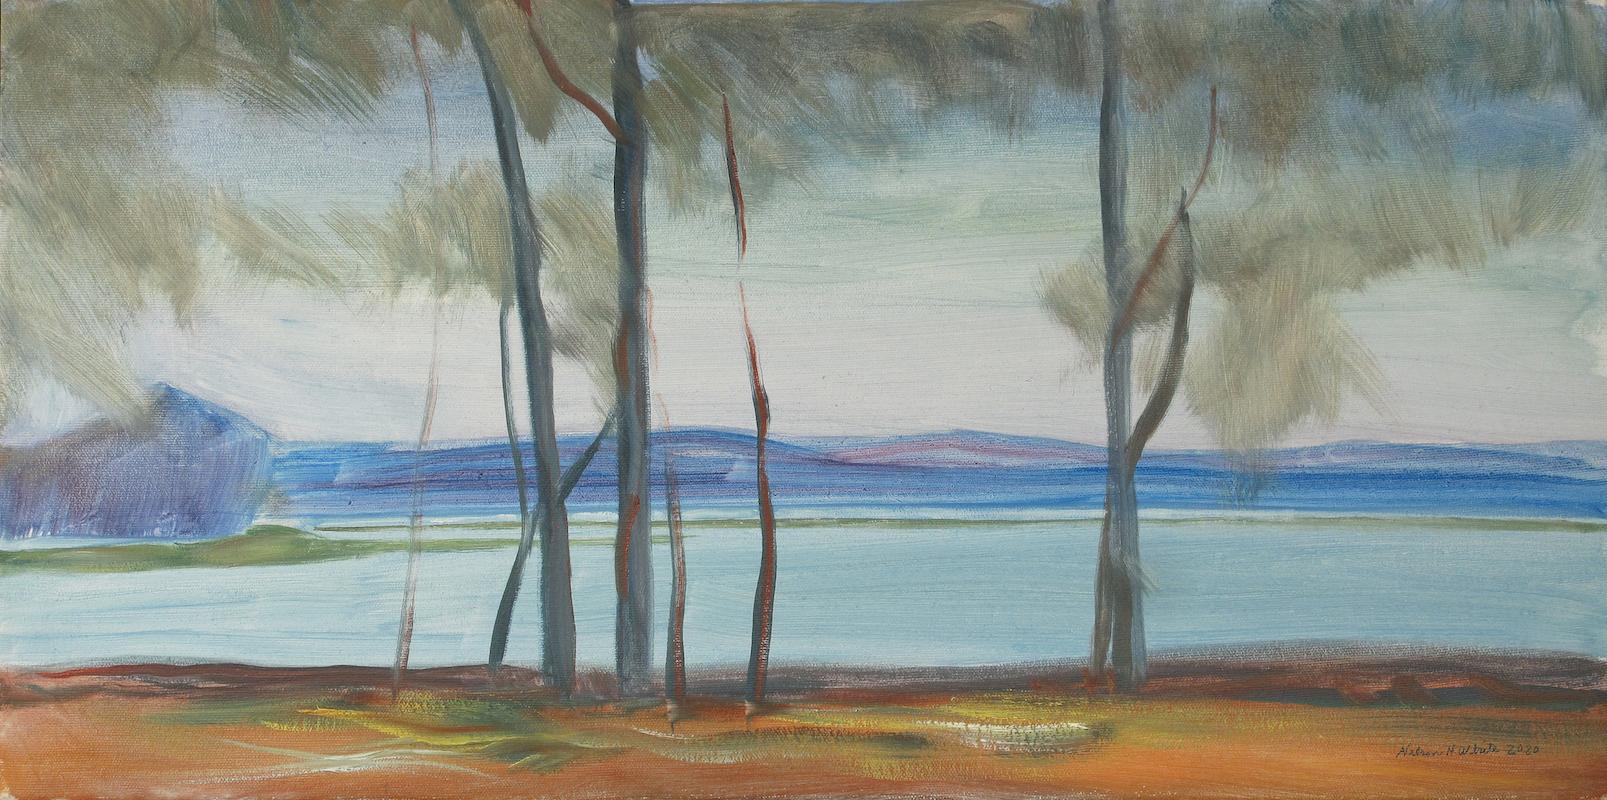 Landscape Painting Nelson White - The Creek Shelter Island (île de refuge) 09.20.2020